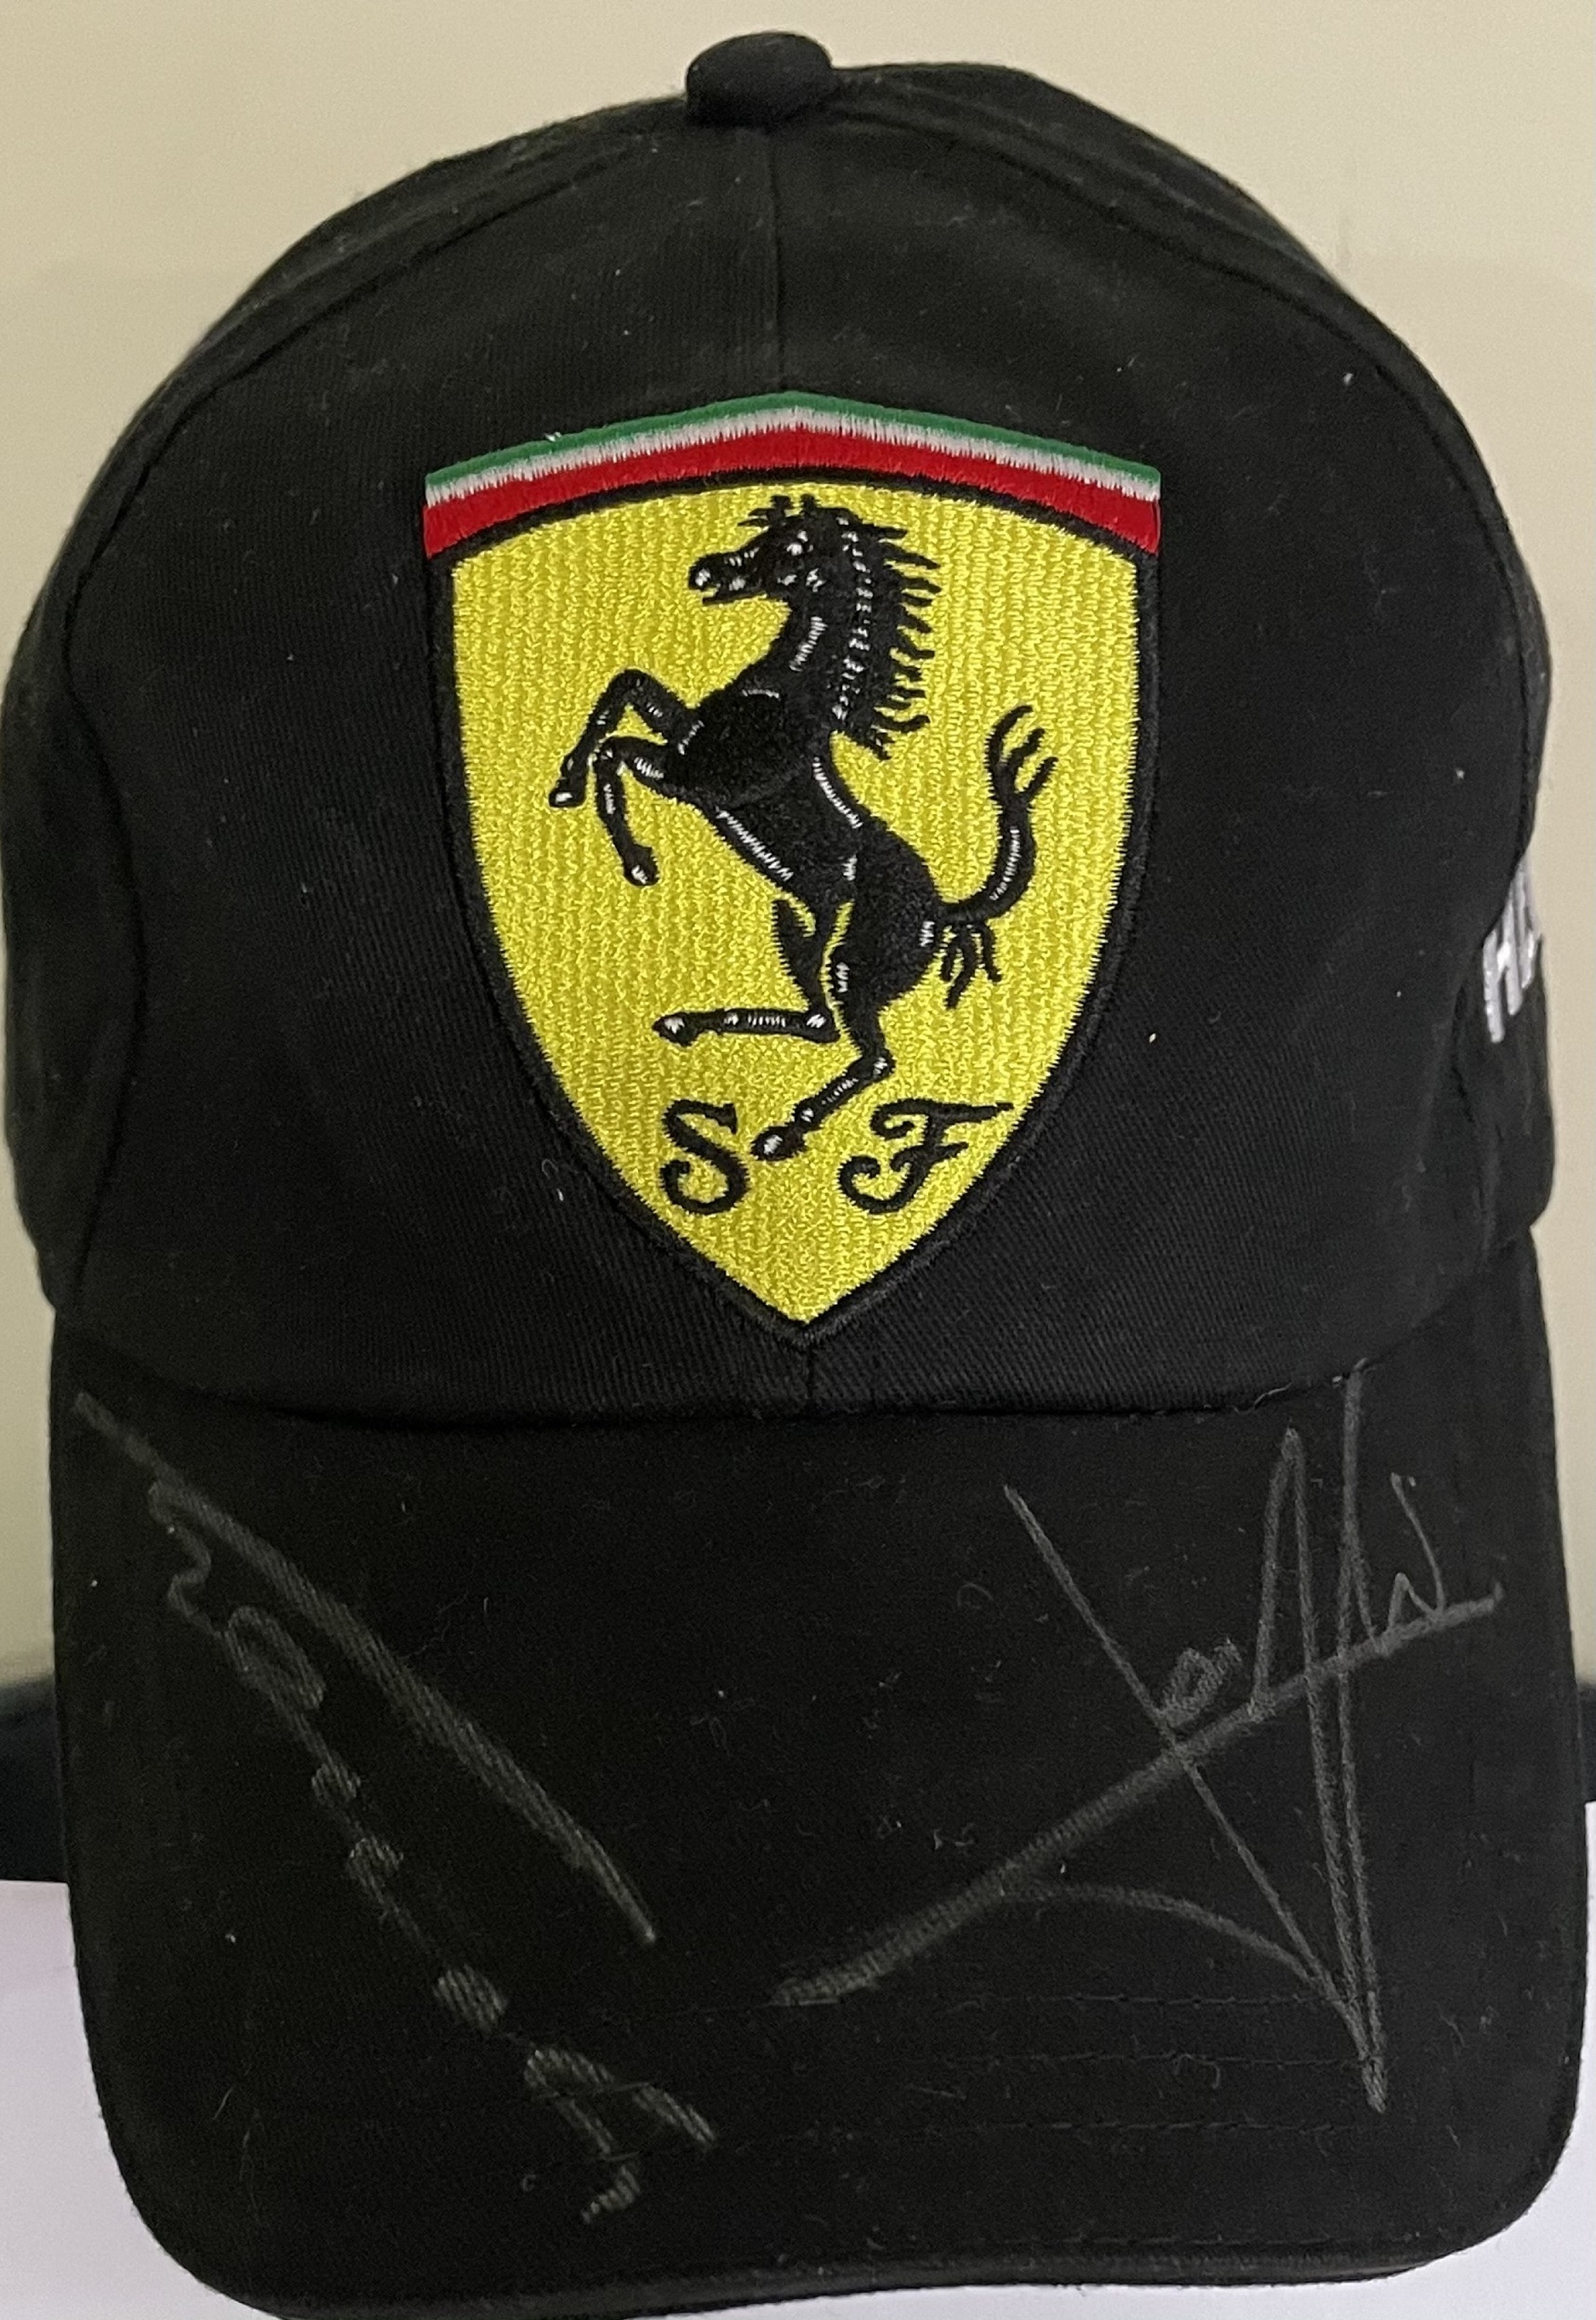 FORMULA ONE: An official souvenir Scuderia Ferrari black baseball-style cap,